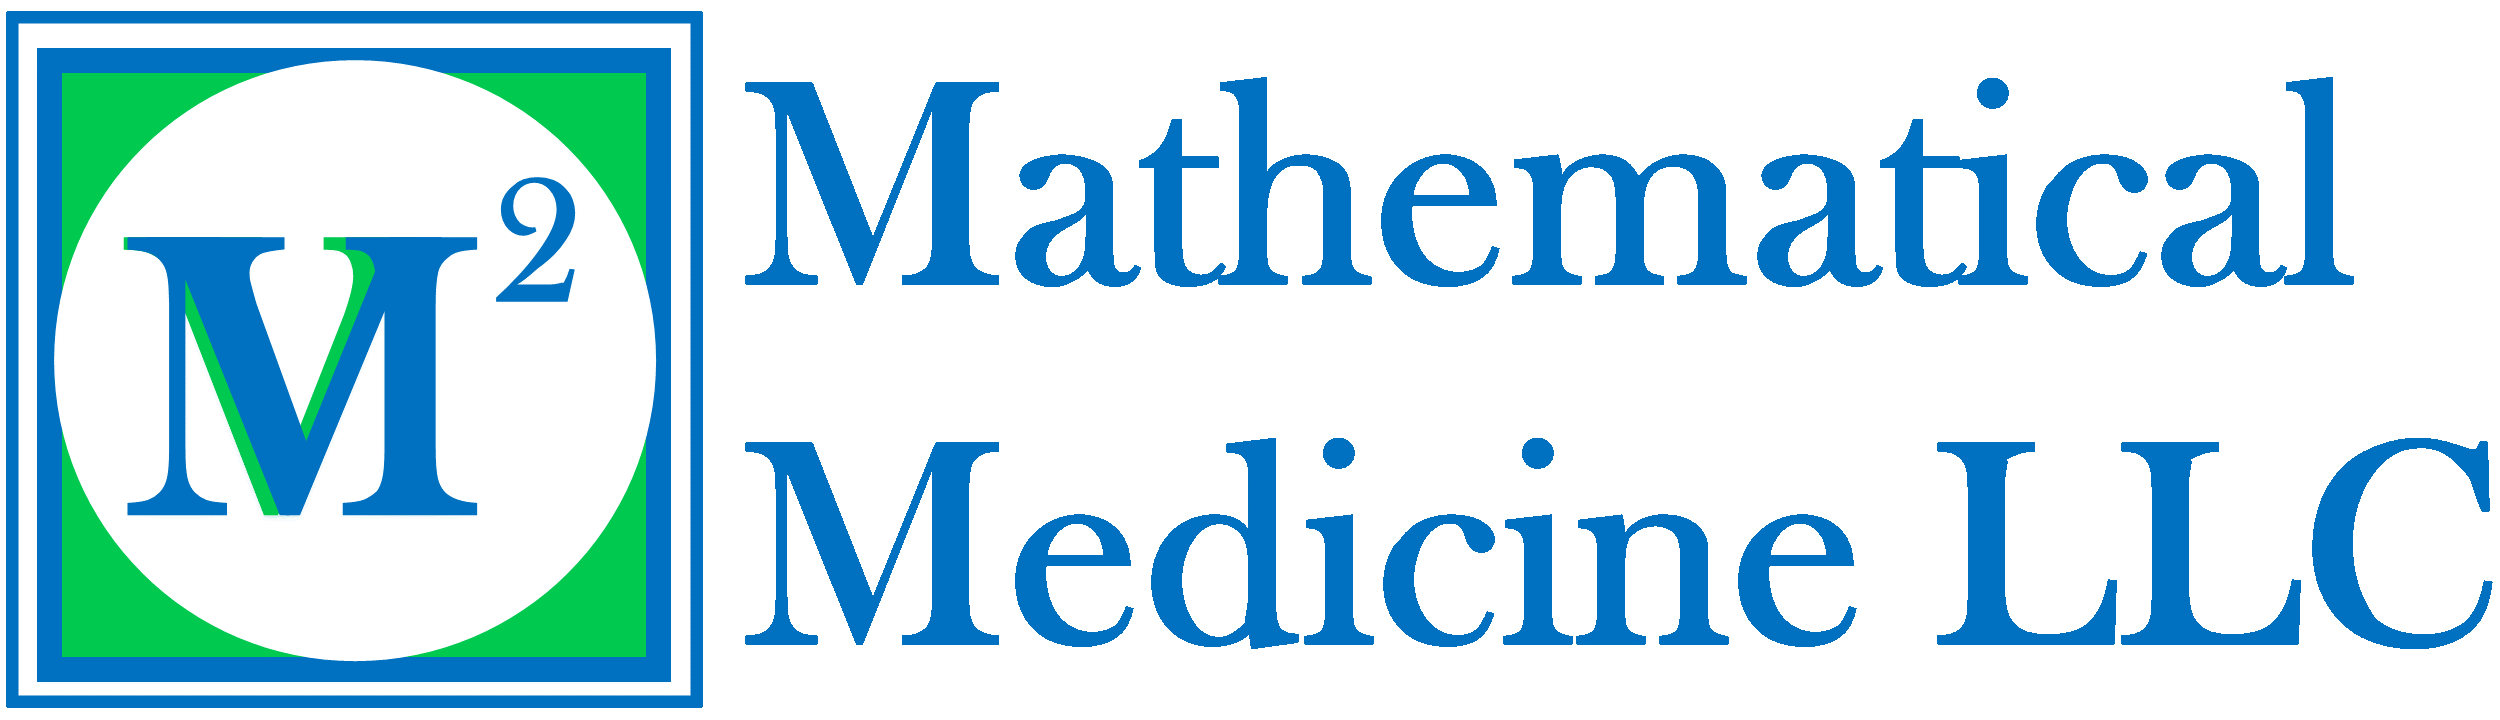 Mathematical Medicine LLC Logo